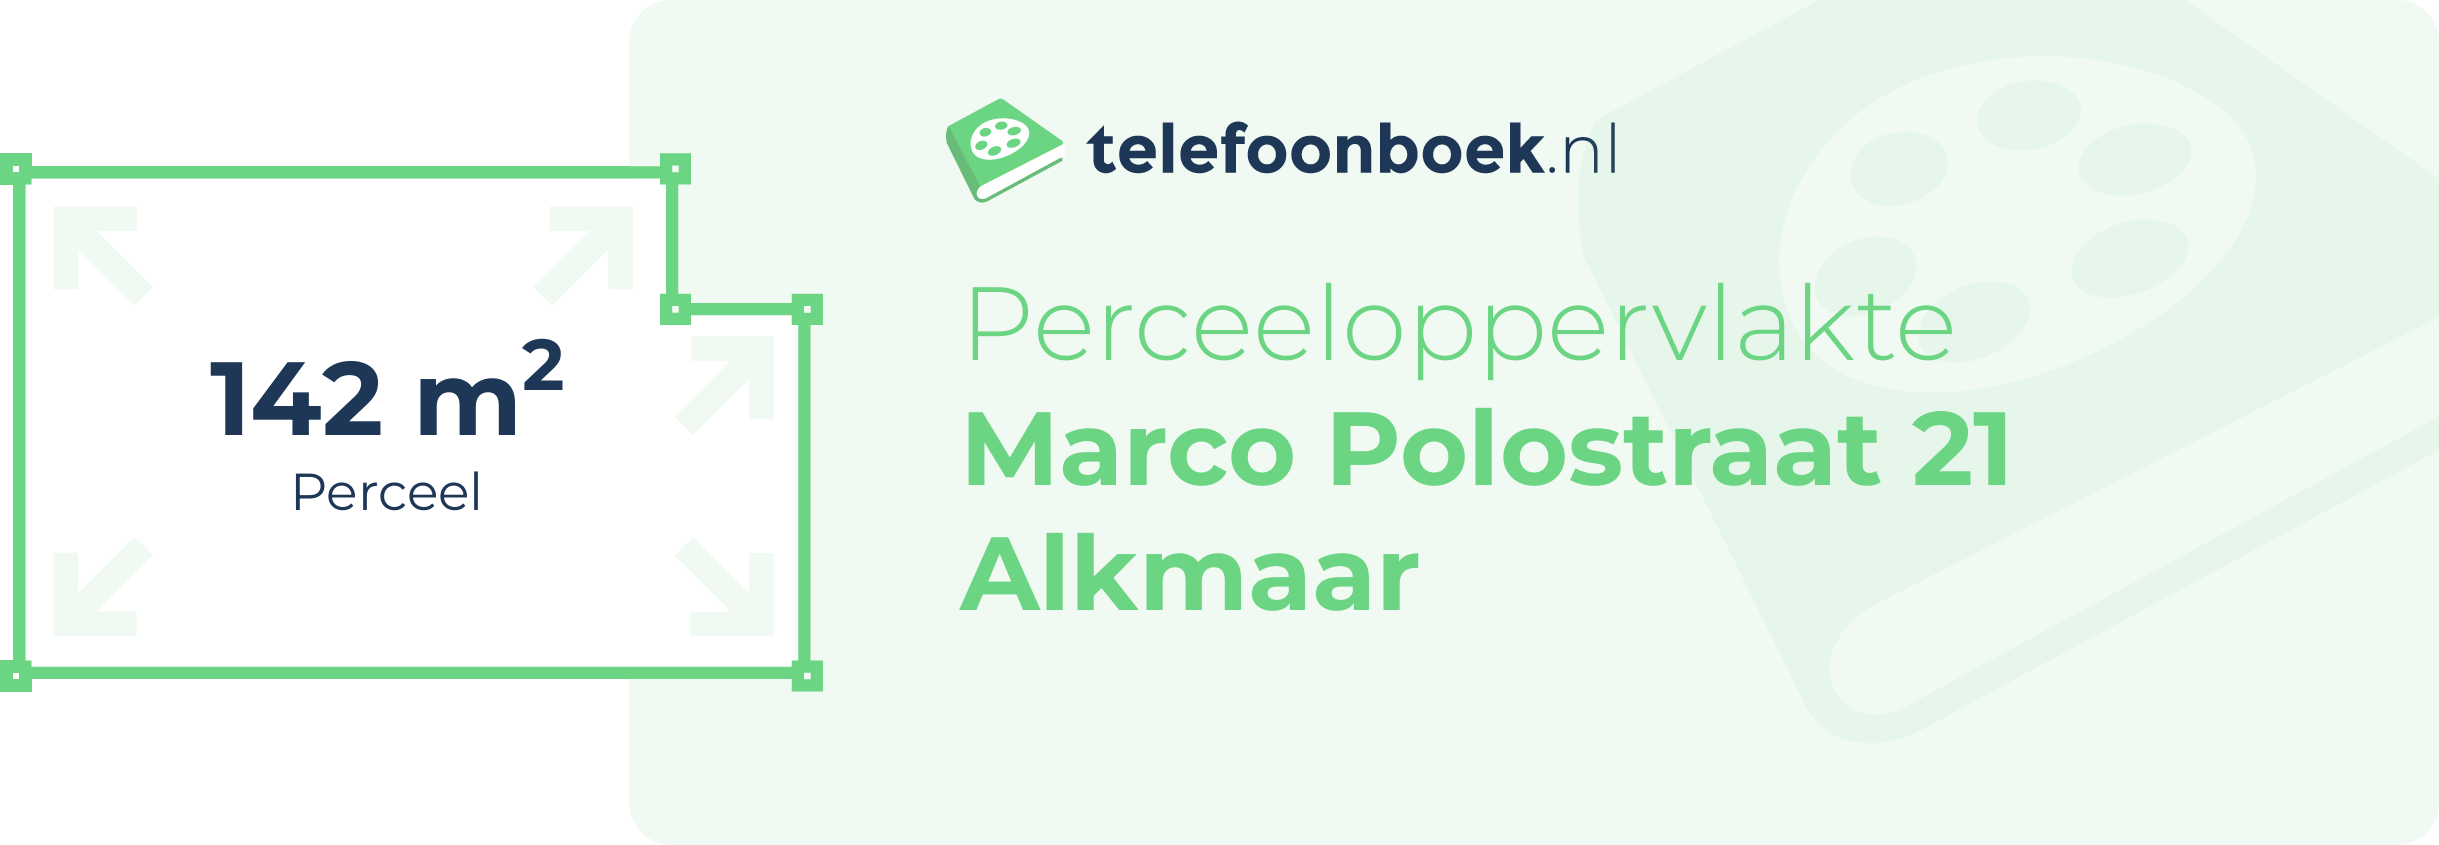 Perceeloppervlakte Marco Polostraat 21 Alkmaar